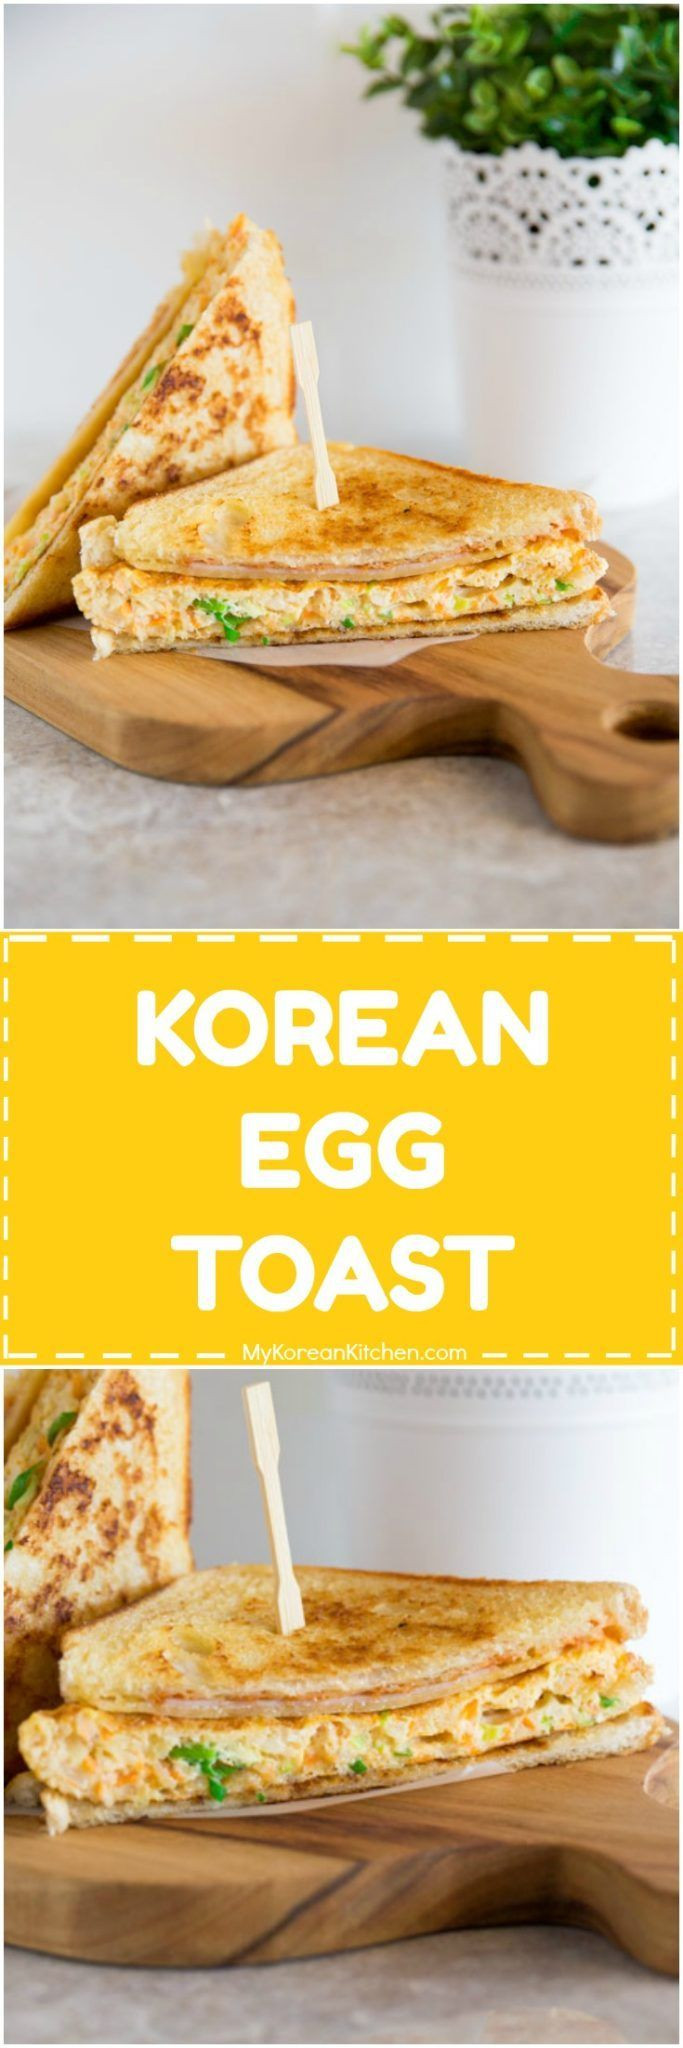 Easy Korean Breakfast Recipes
 Korean Toast Recipe